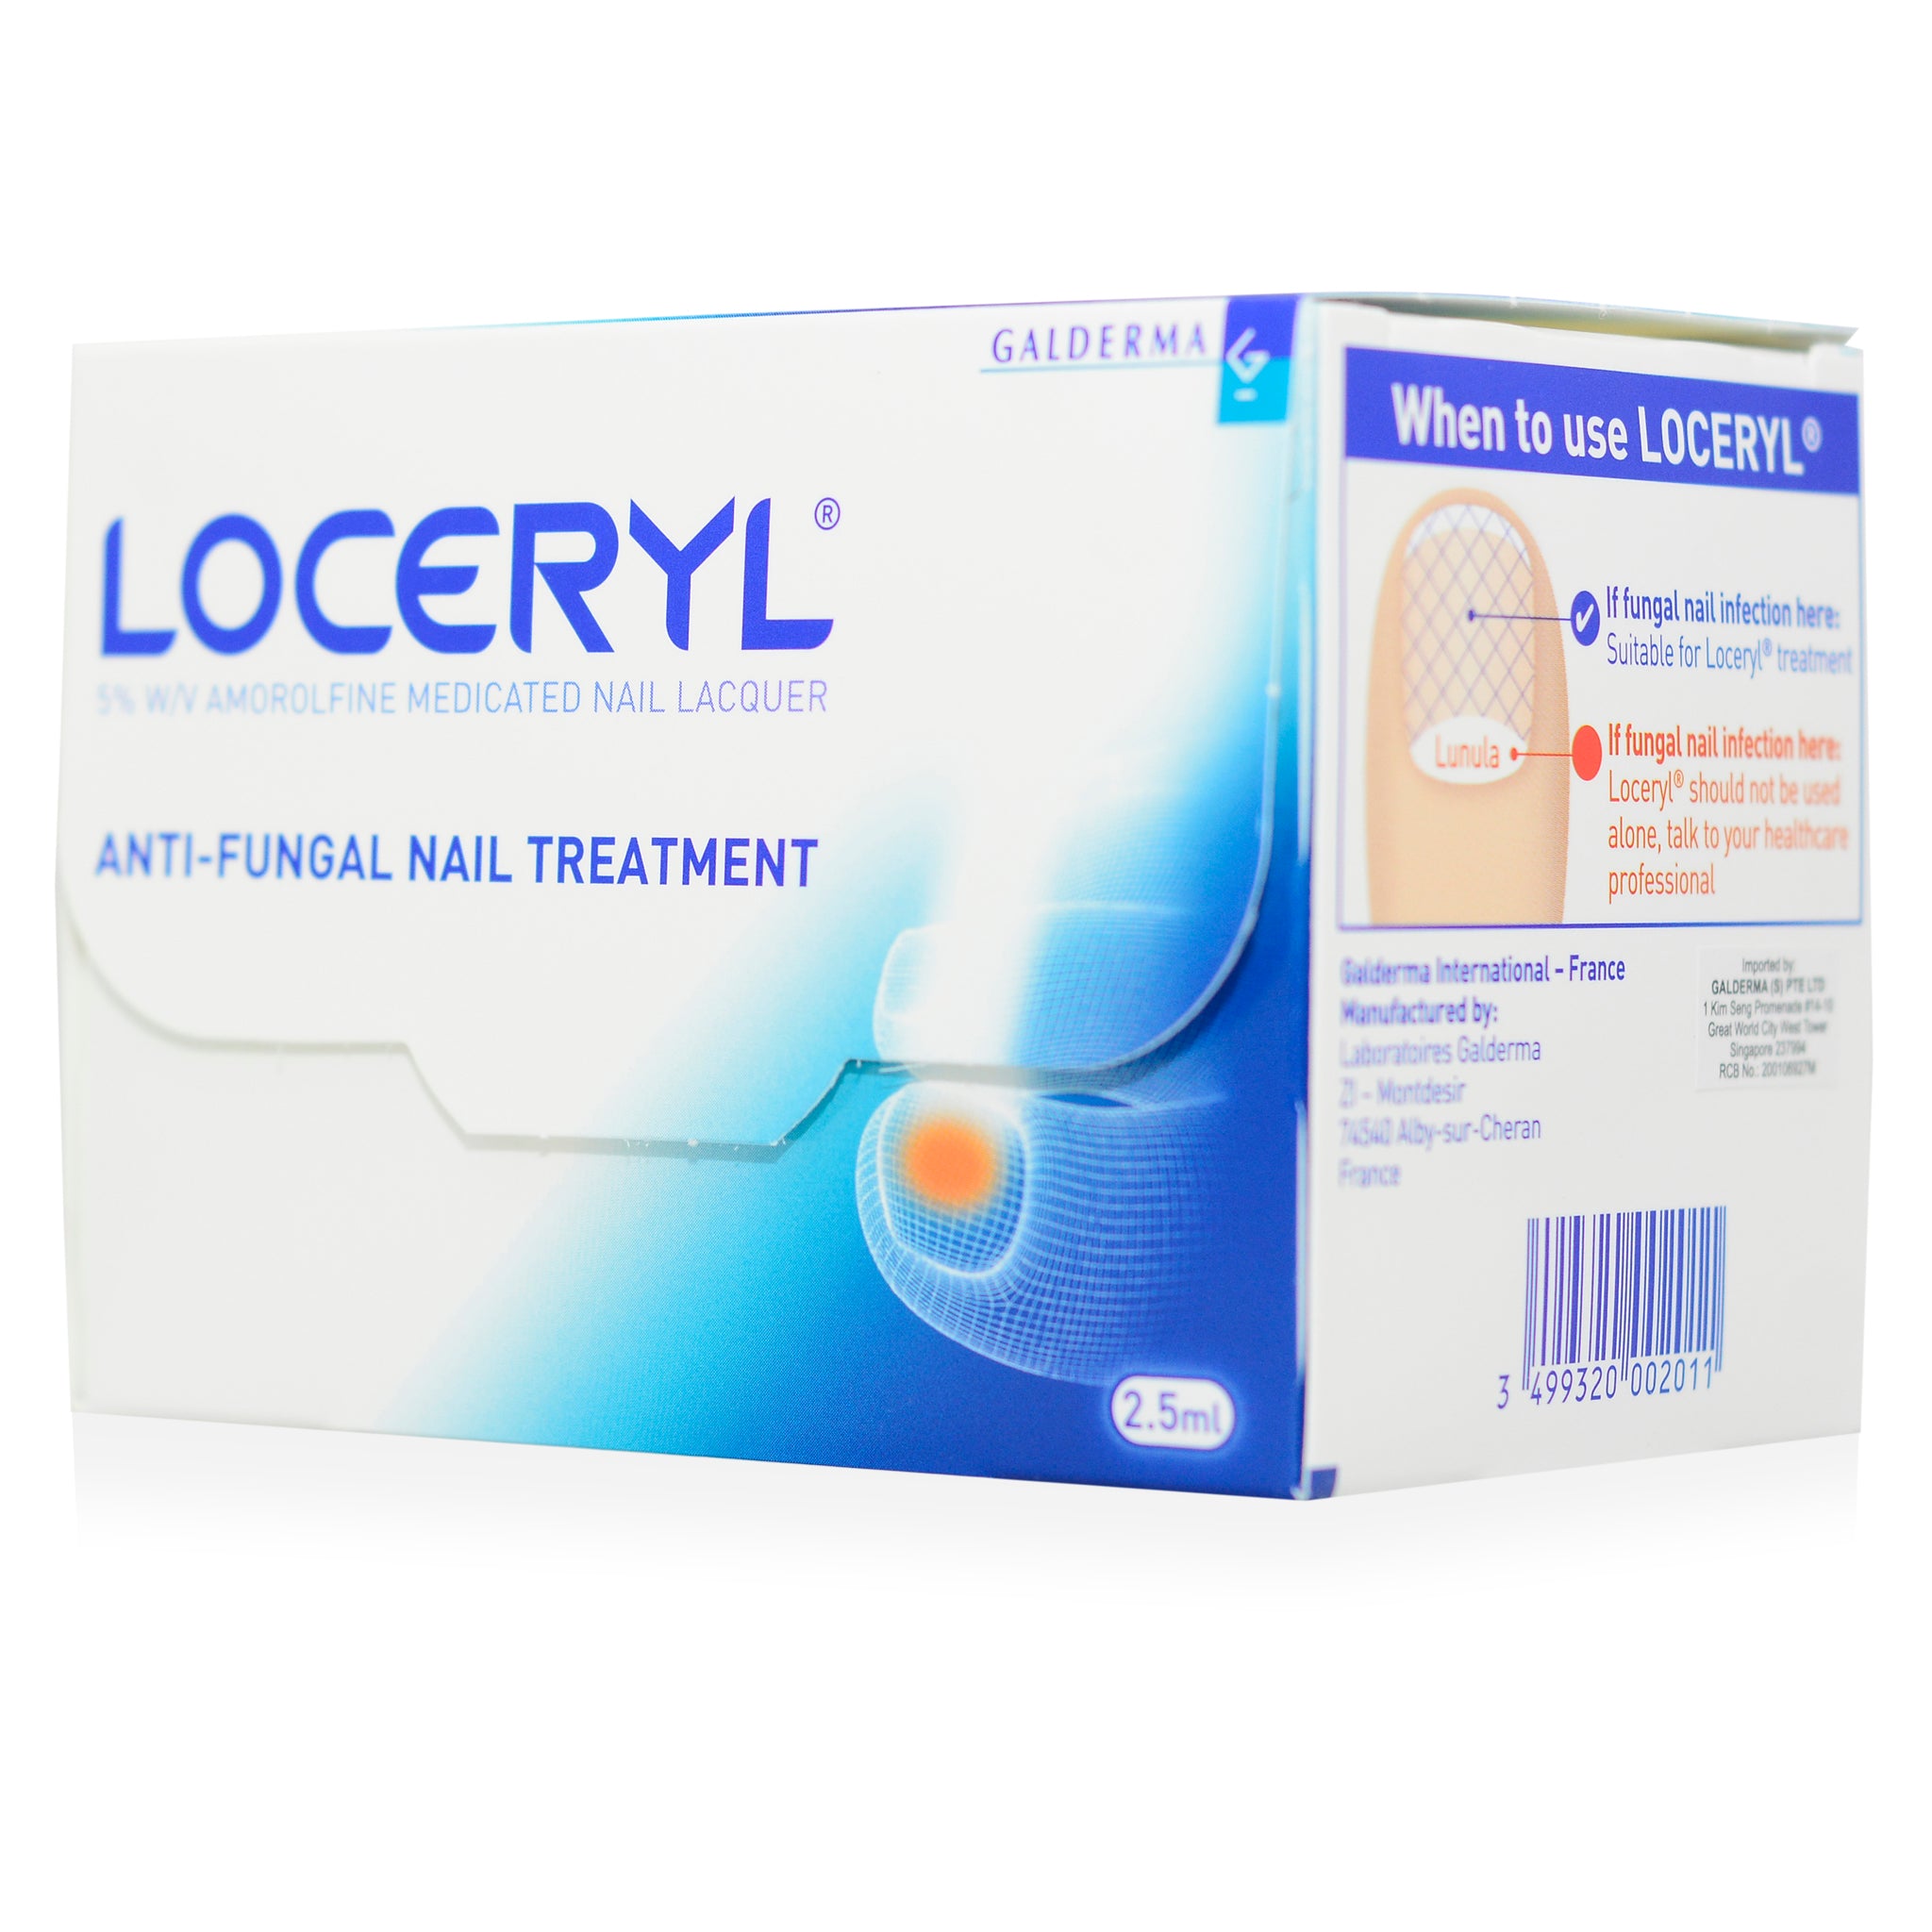 Loceryl Curanail 5% Nail Lacquer Amorolfine Treatment - Mediboost Healthcare